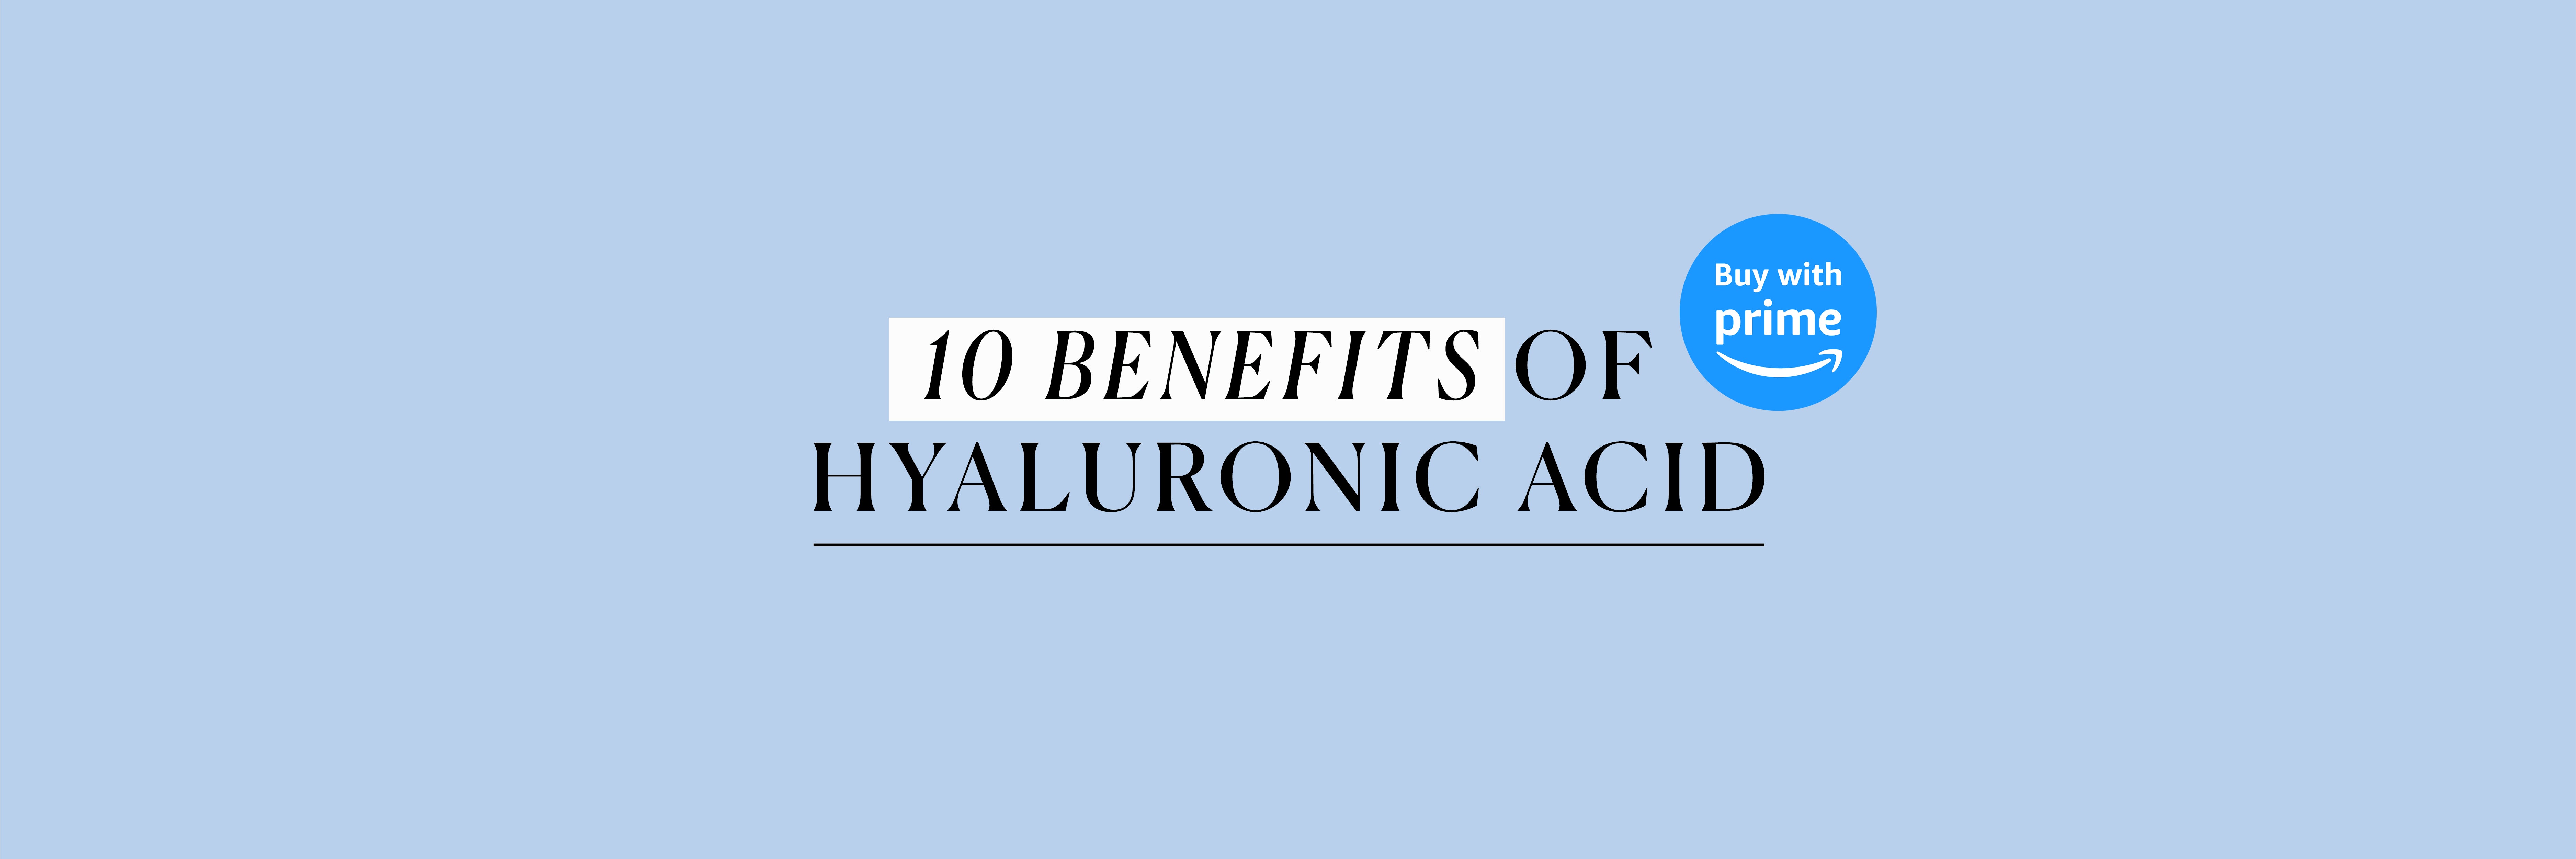 Top 10 Benefits of Hyaluronic Acid